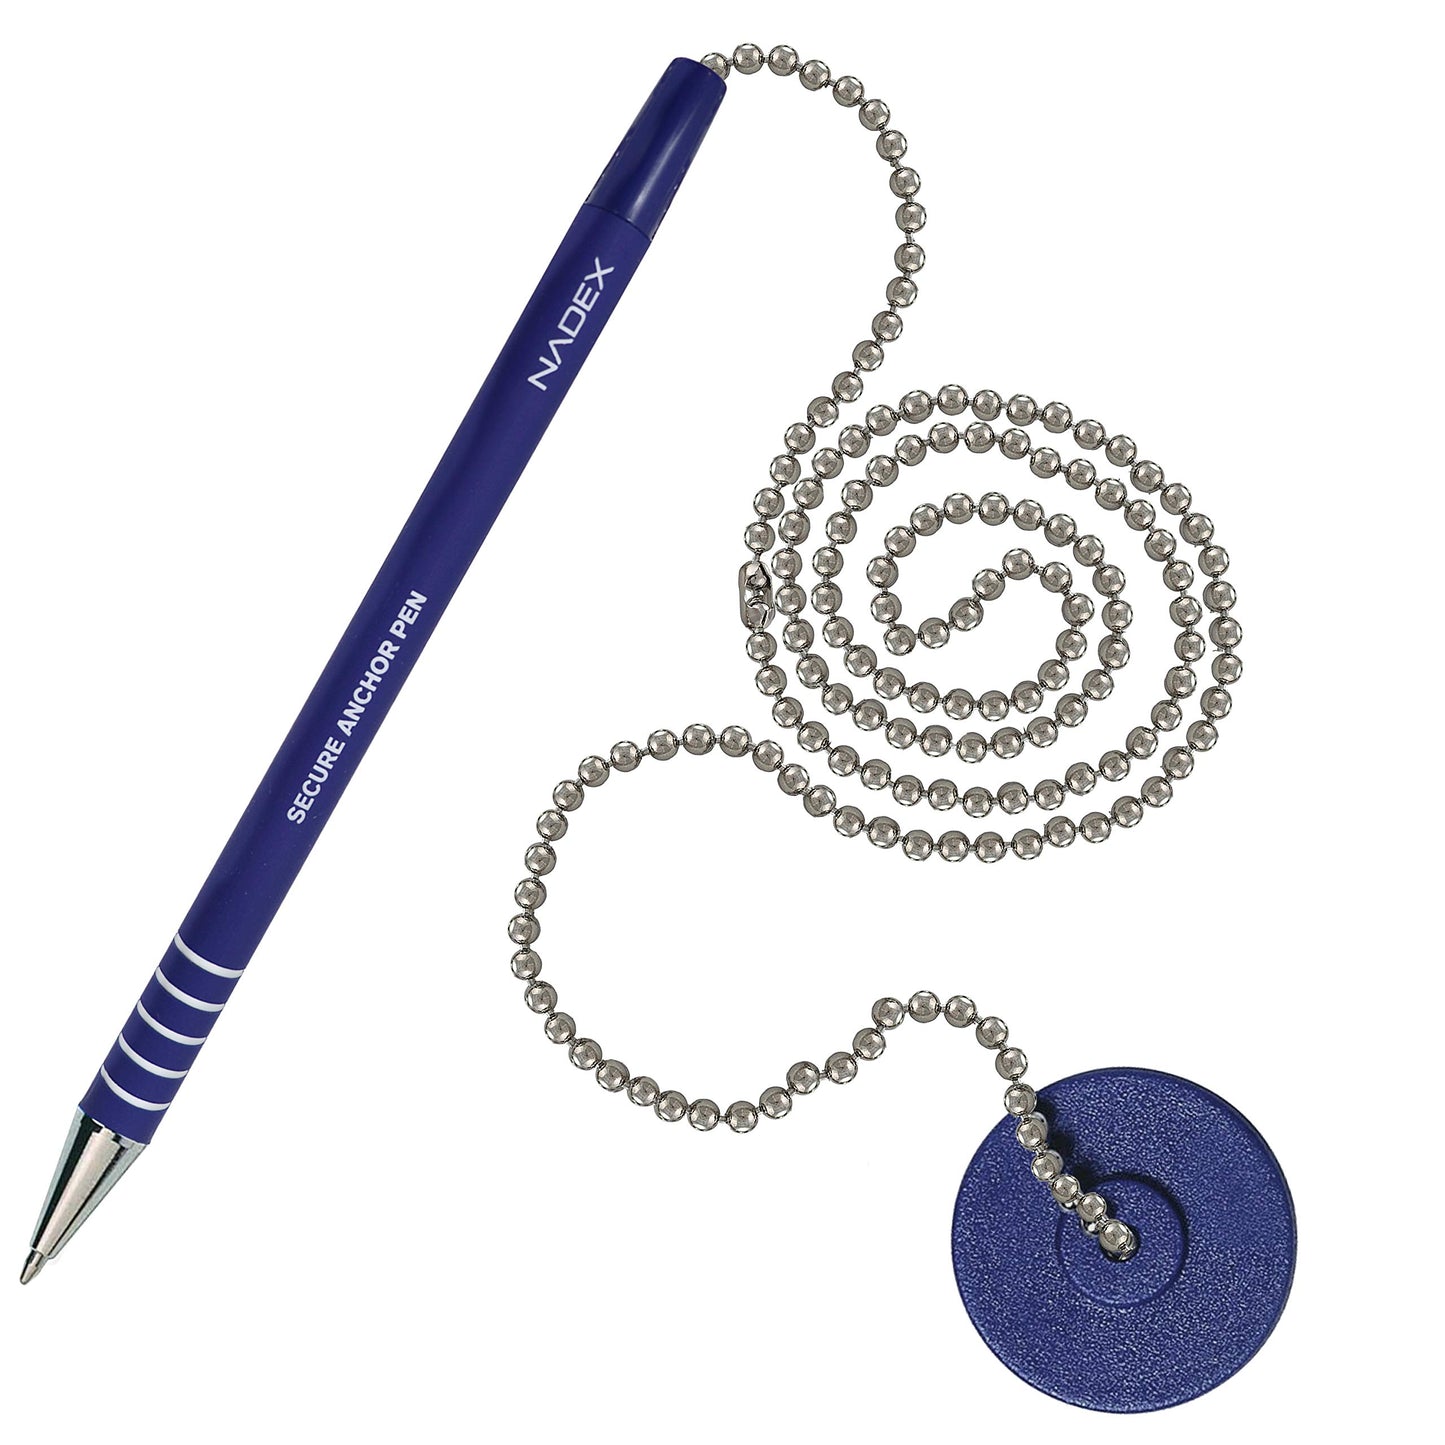 Security Chain Security Pen, 4 Pens, 1 Base, 5 refills, blue